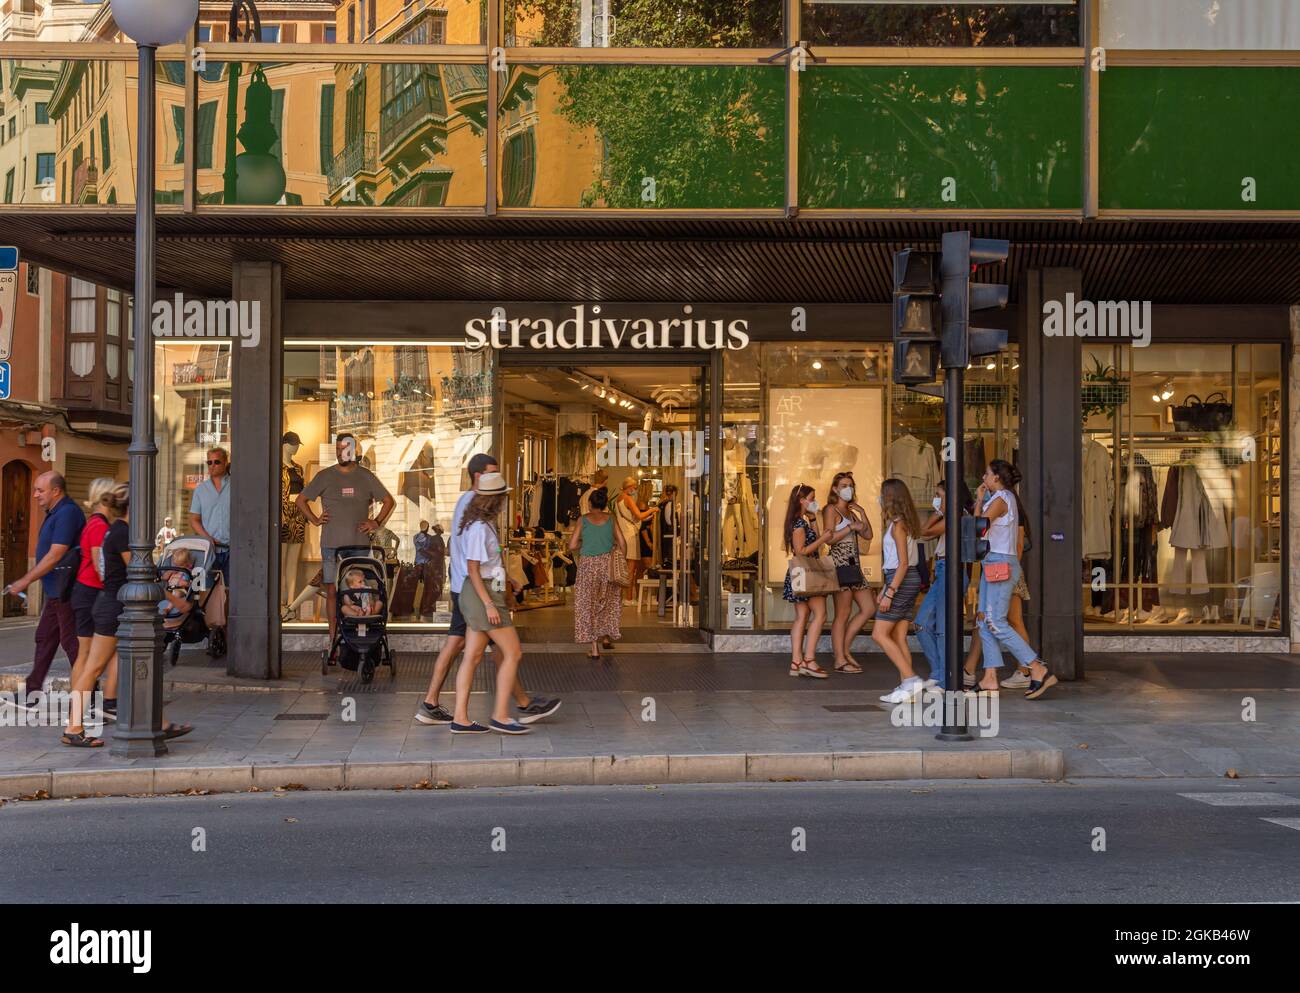 Palma de Mallorca, Spain; september 10 2021: Main facade of an establishment of the international fashion and accesories retail chain Stradivarius, in Stock Photo